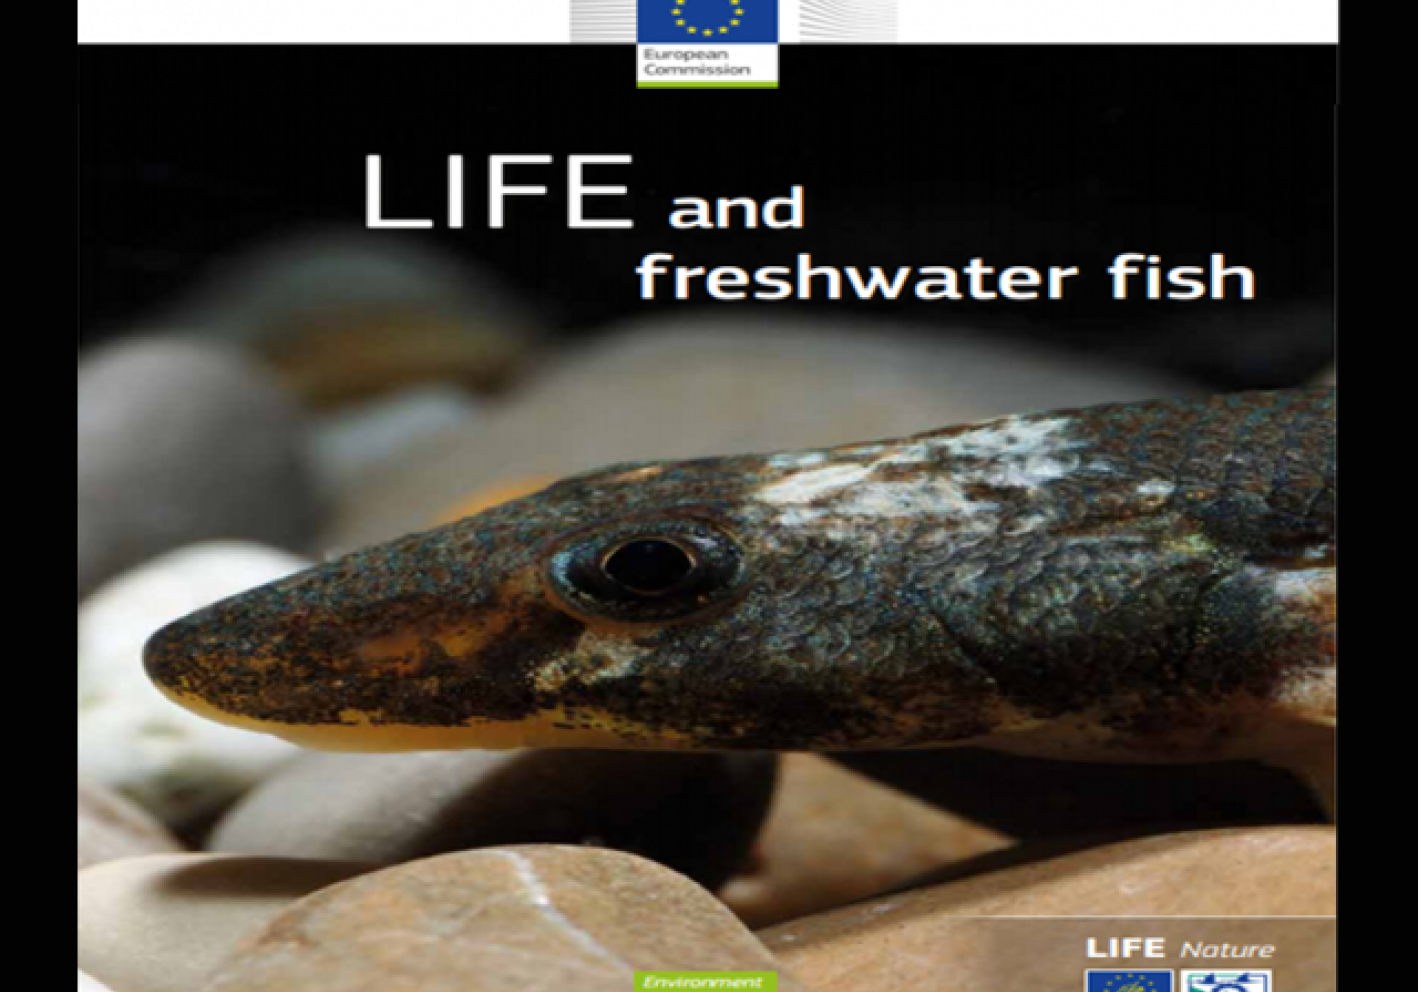 Freshwater Fish Report 